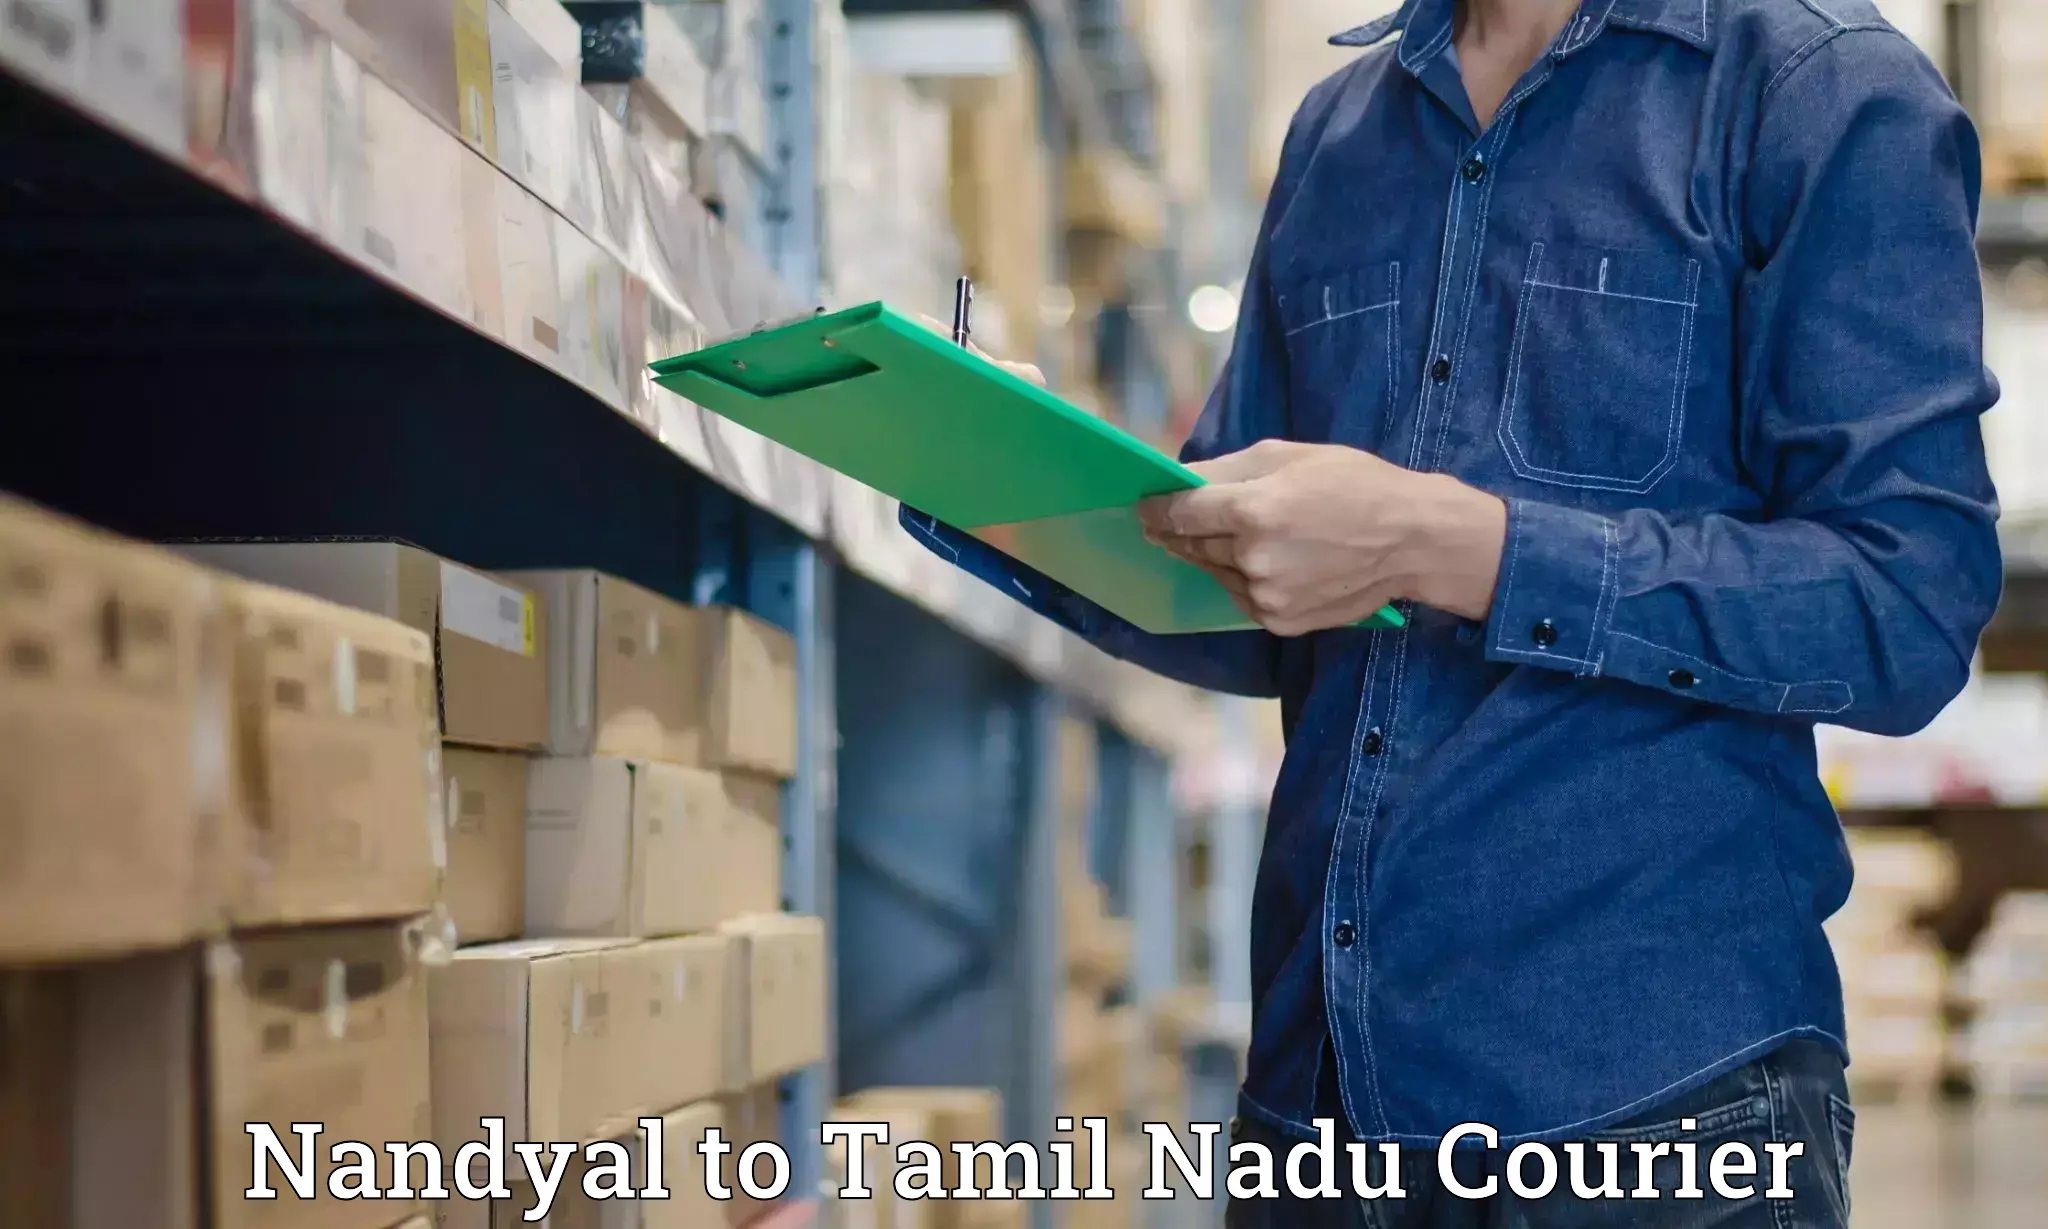 Efficient order fulfillment Nandyal to Dindigul